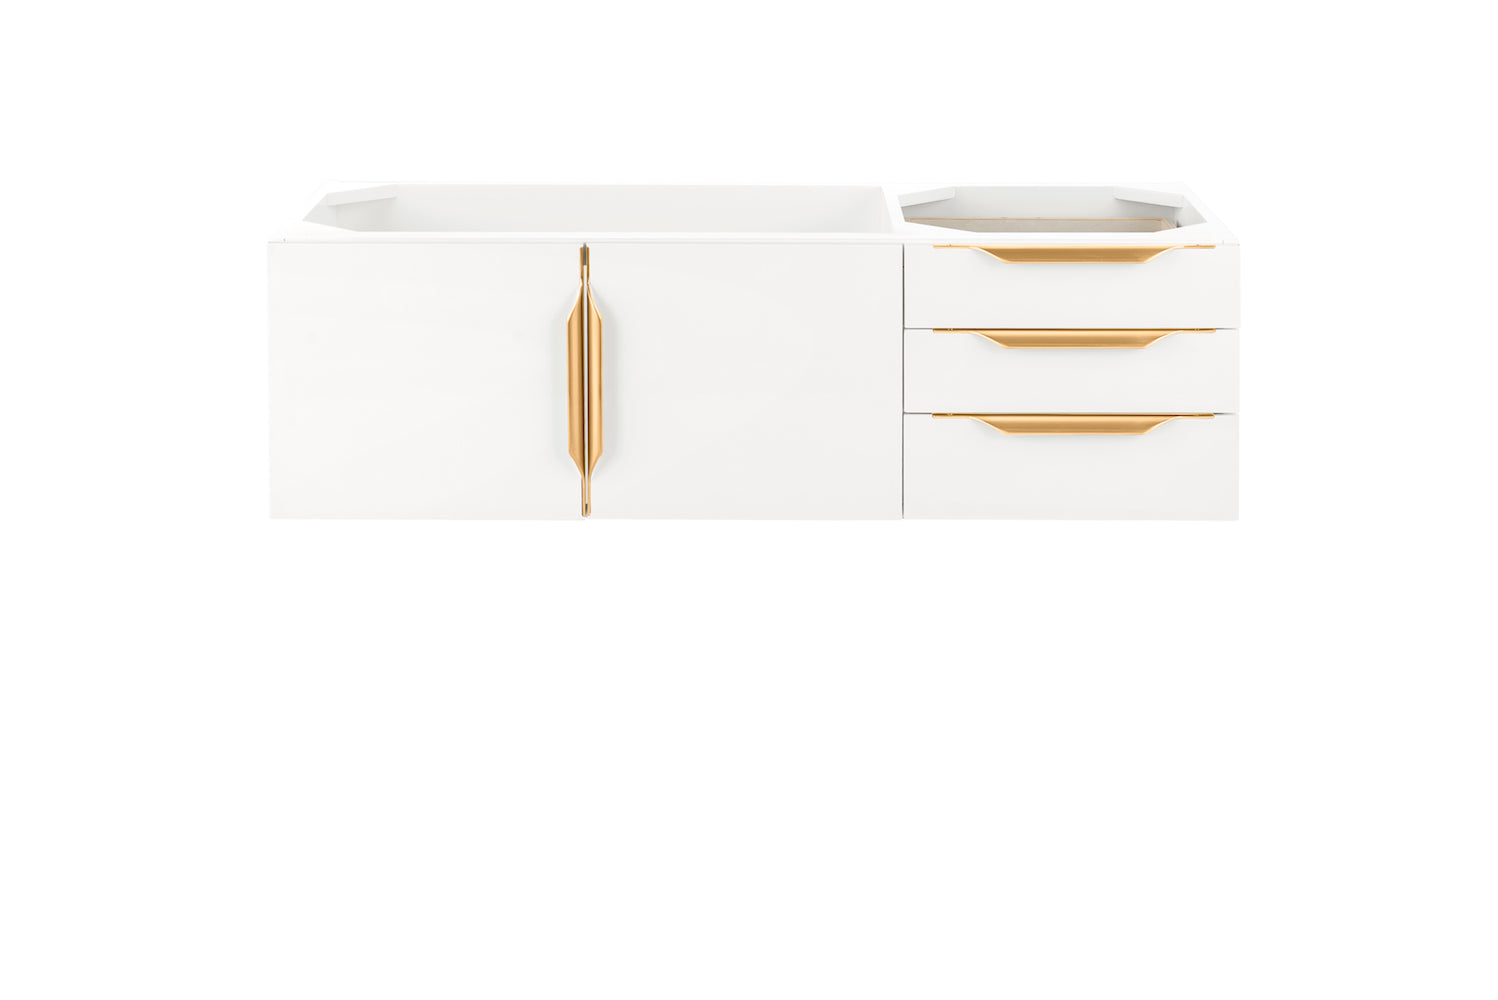 48" Mercer Island Single Sink Bathroom Vanity, Glossy White w/ Radiant Gold